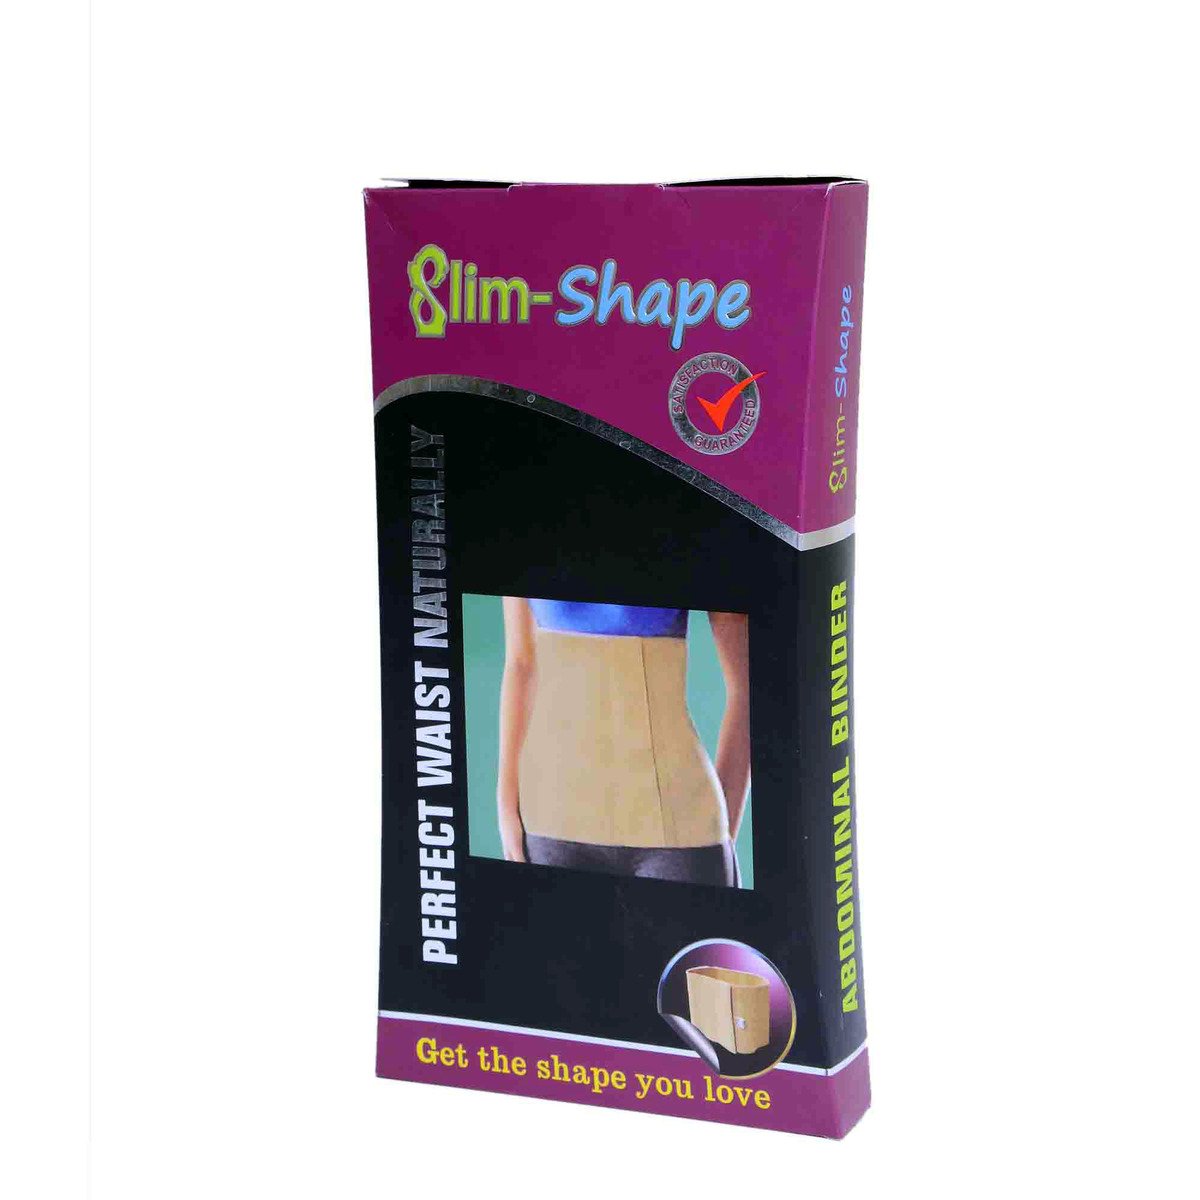 Slim-Shape Abdominal Binder 1pc